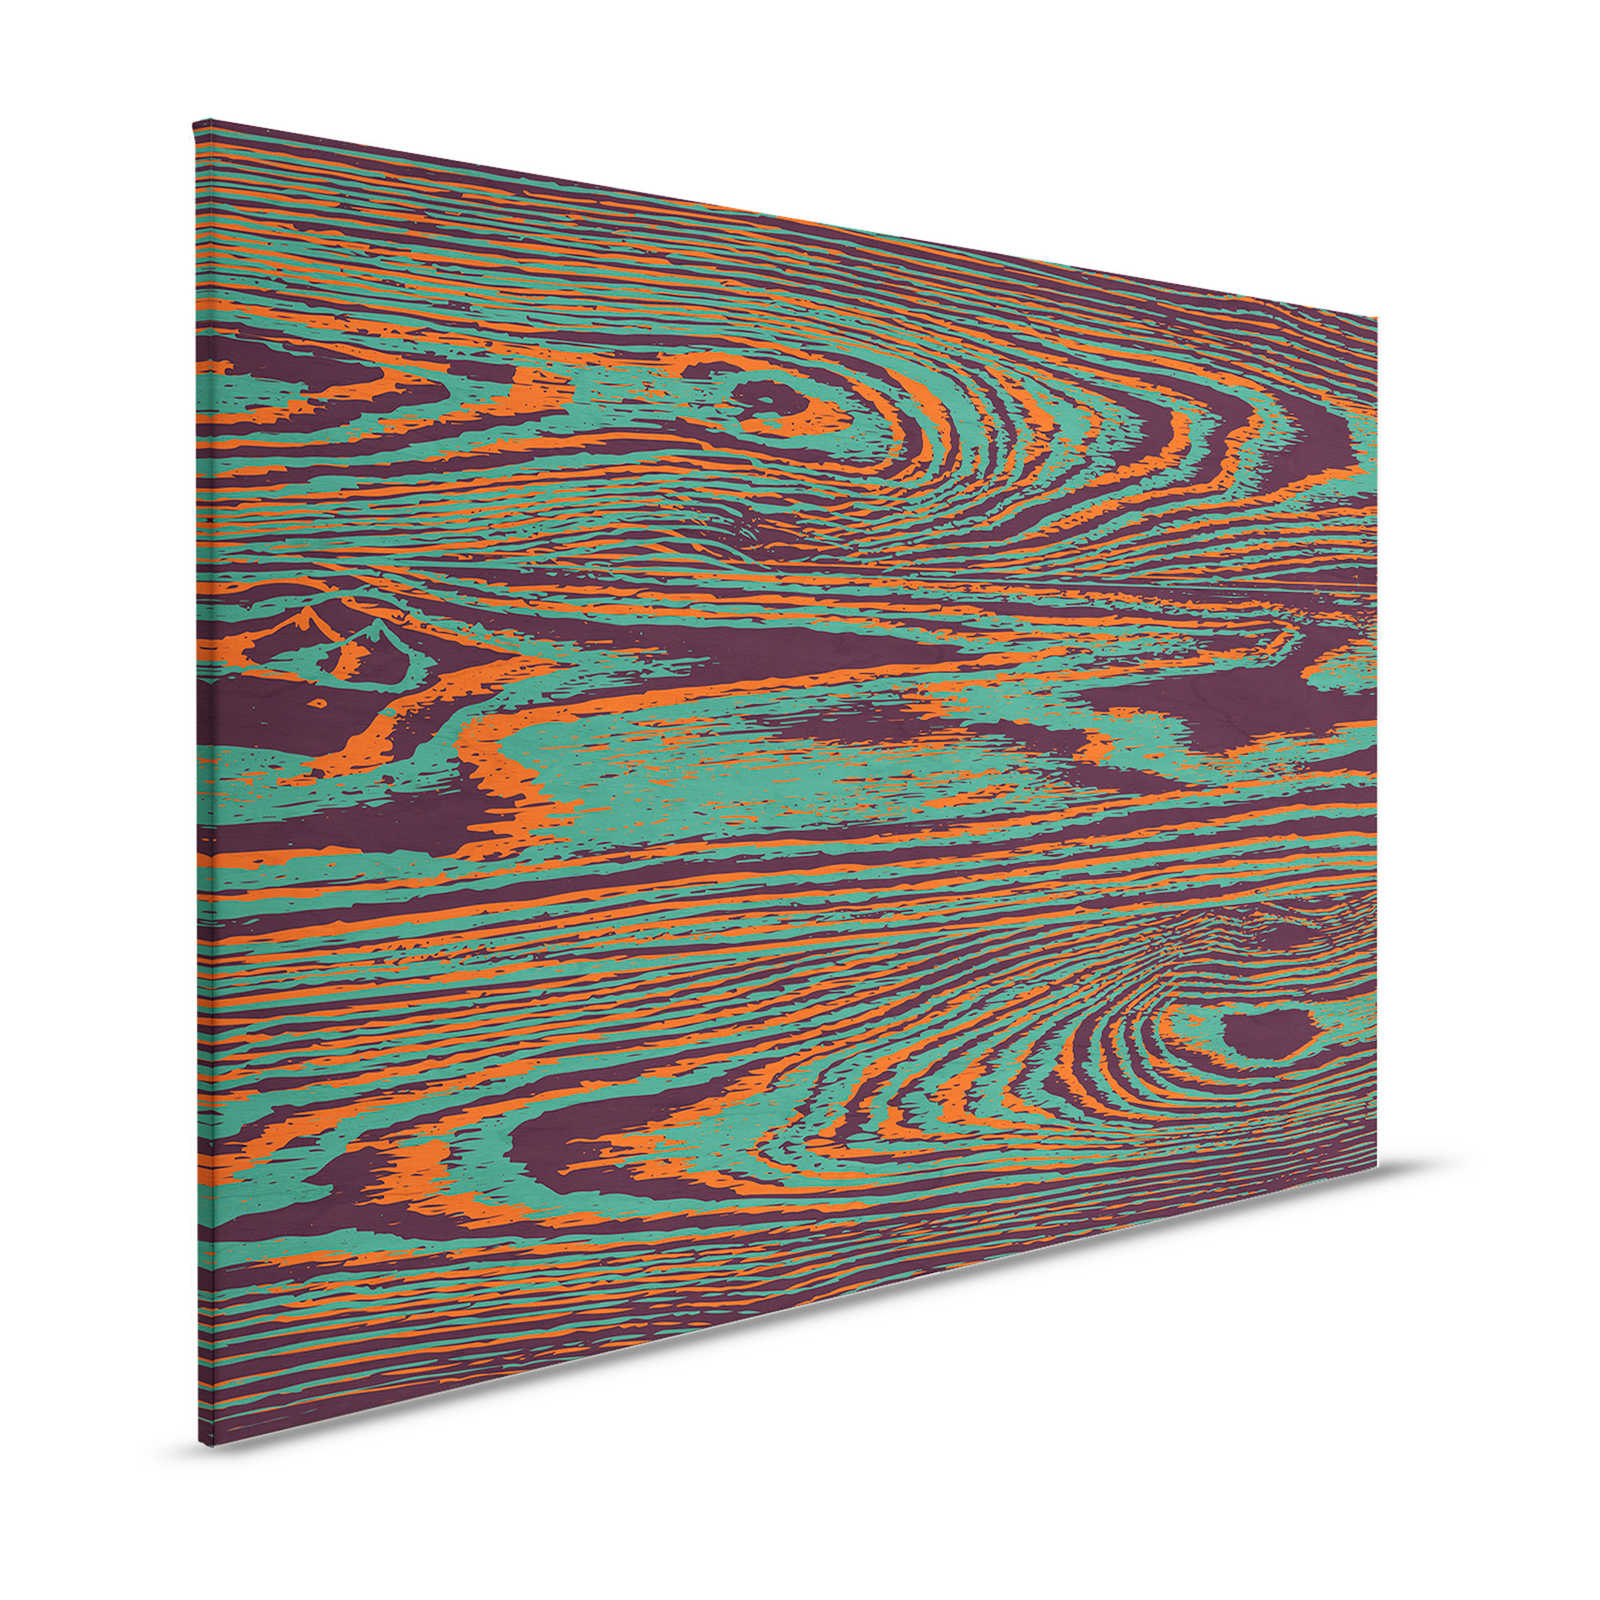 Kontiki 1 - Canvas painting Wood Grain Neon Colours, Green & Black - 1.20 m x 0.80 m
